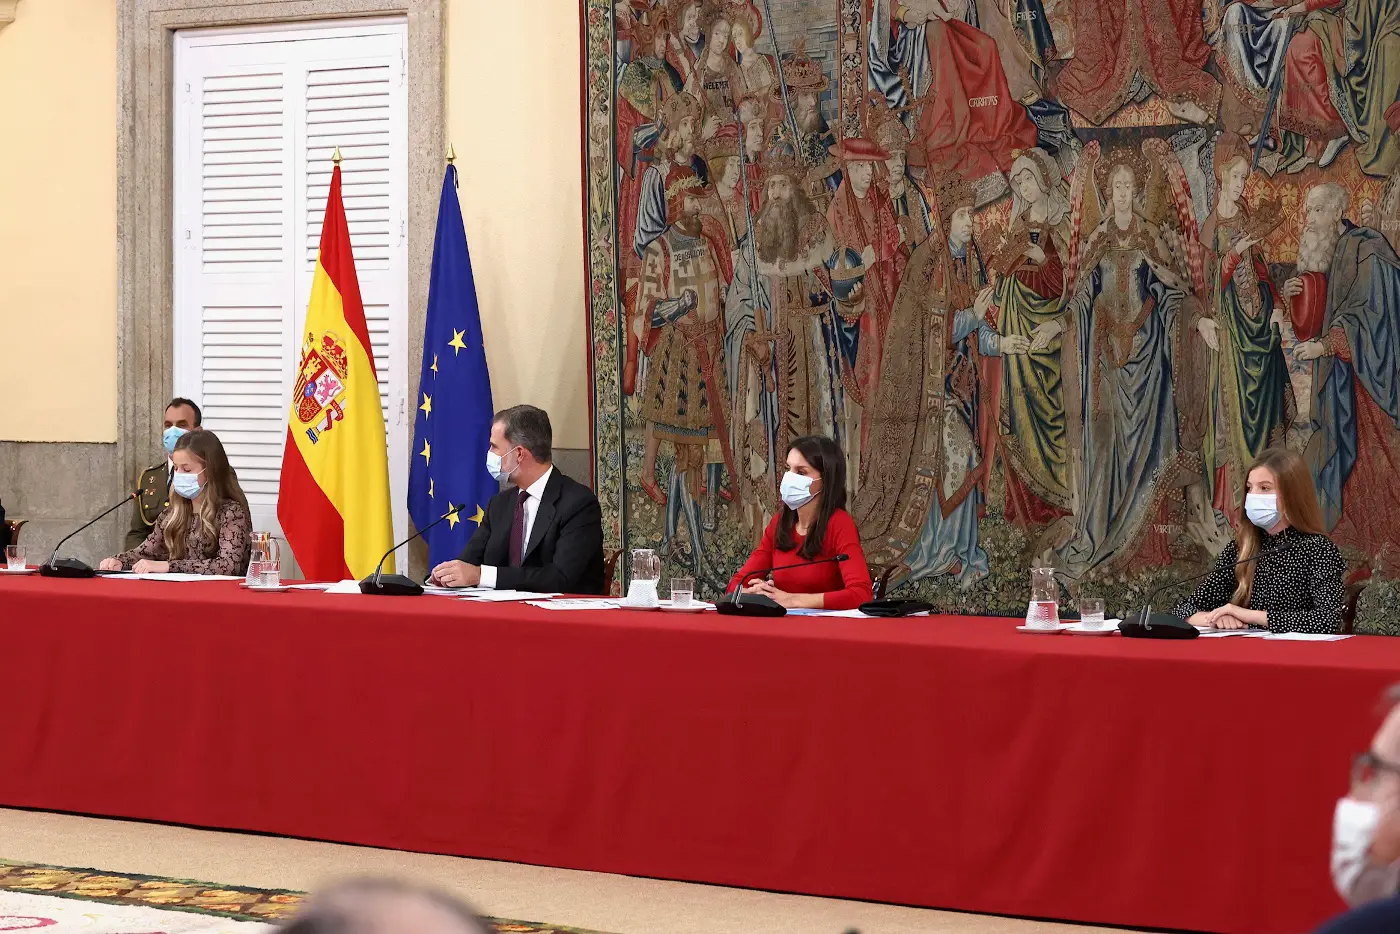 Spain Royal Family at the Princess of Girona Foundation Meeting